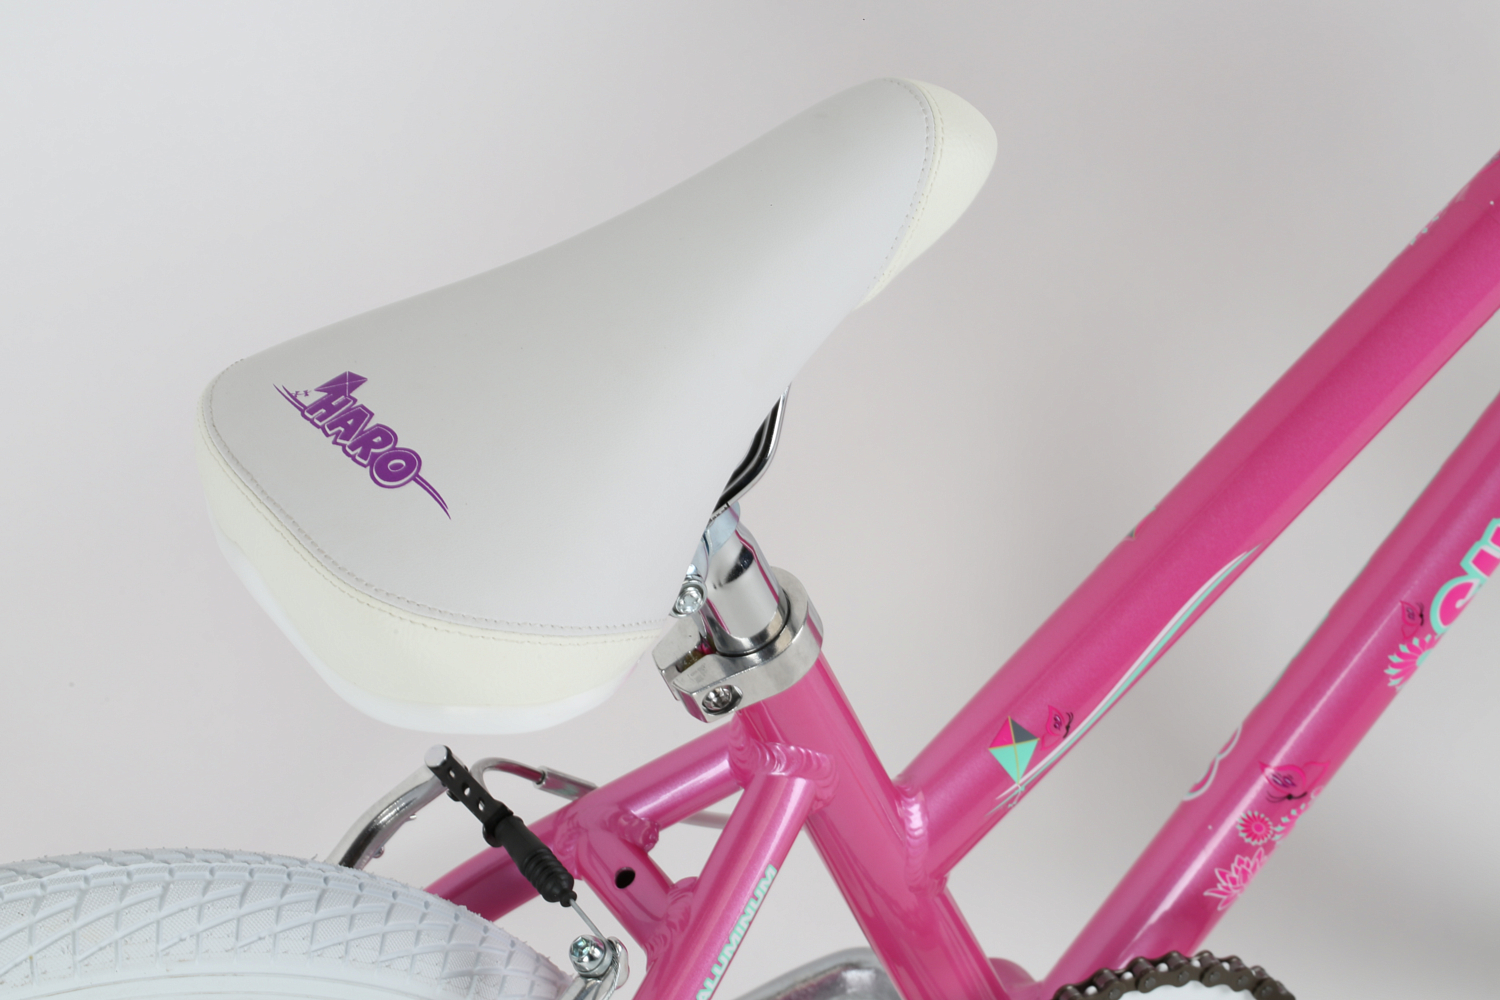 Велосипед Haro Shredder 16 Girls 2019 розовый